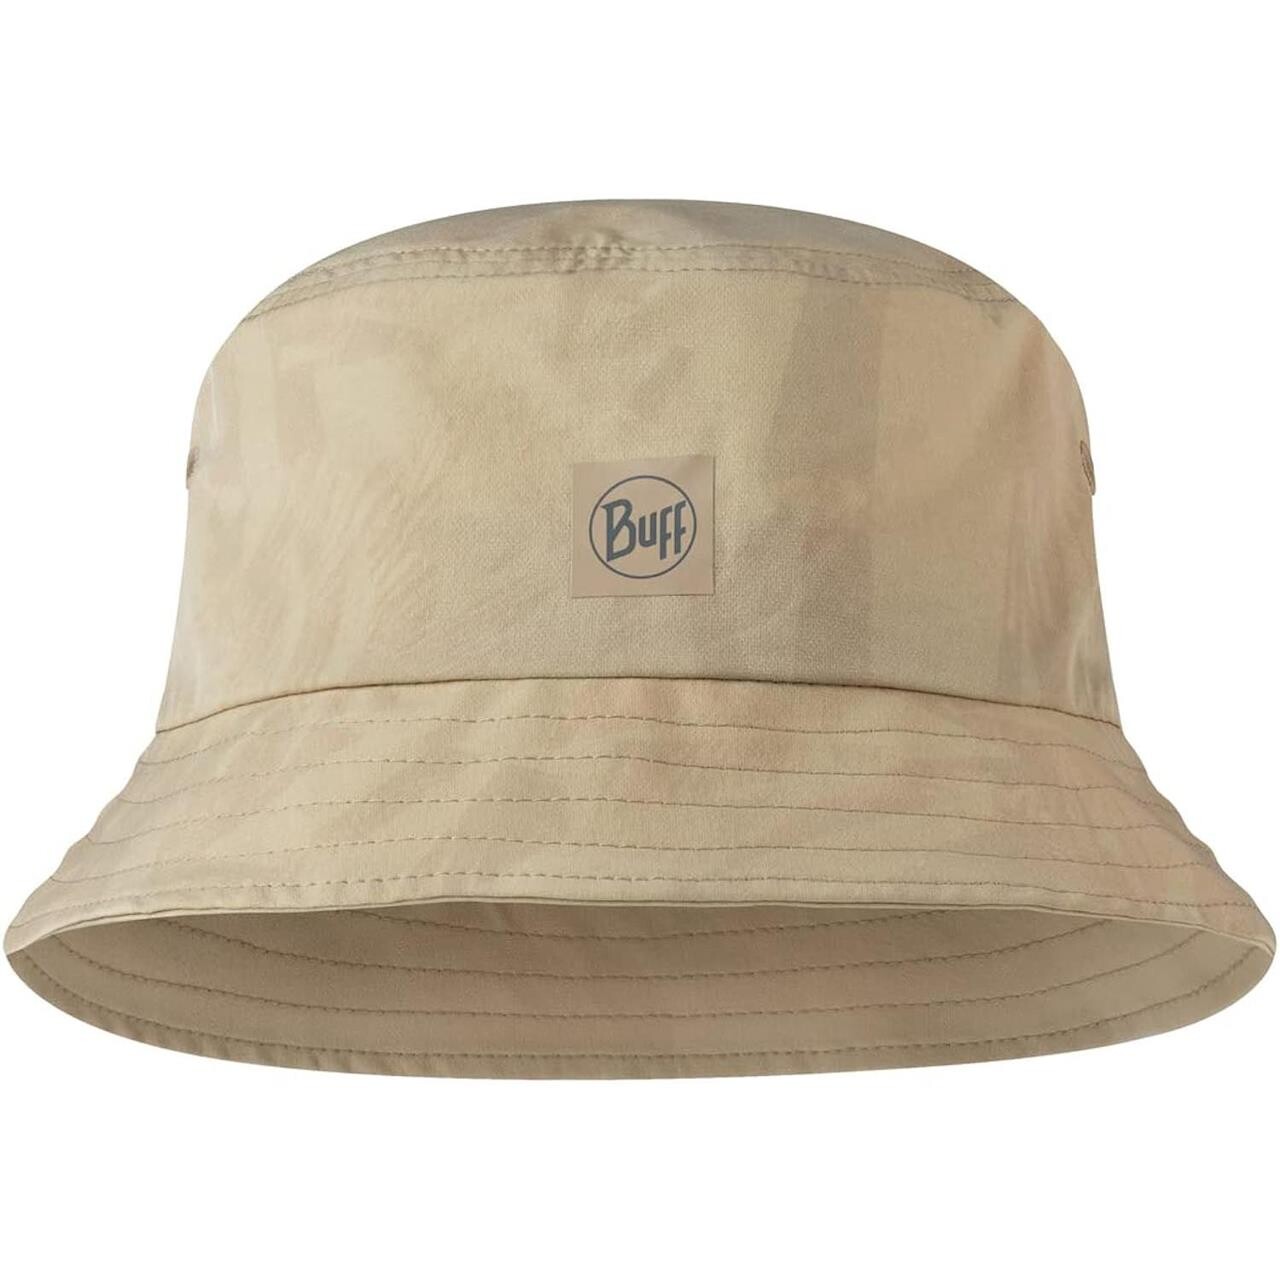 Buff Adventure Bucket Hat (Beige (ACAI SAND) Small/medium)